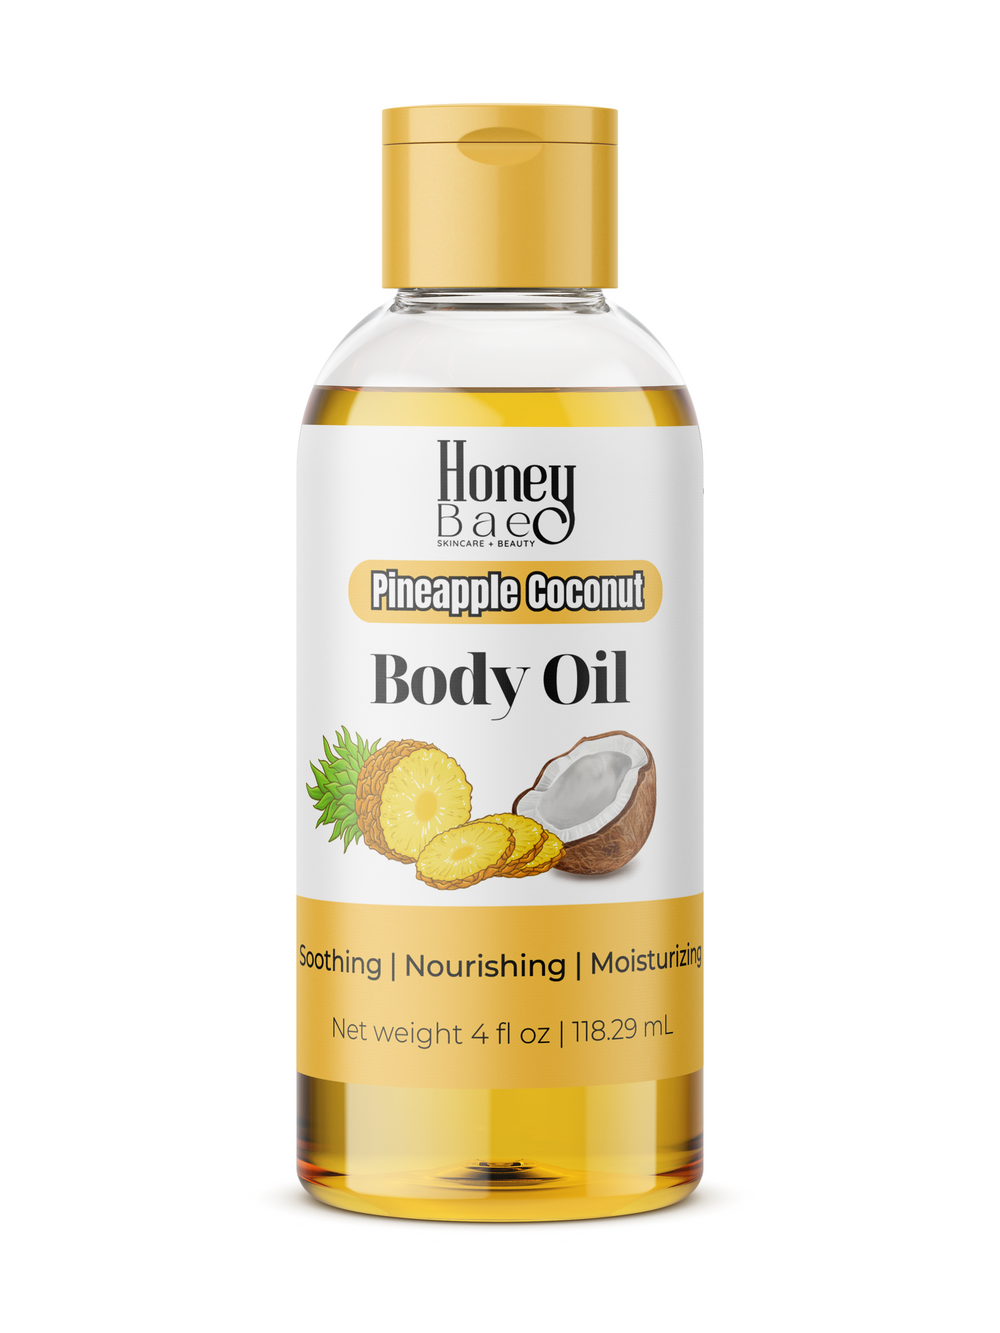 Pineapple Coconut - Body Oil